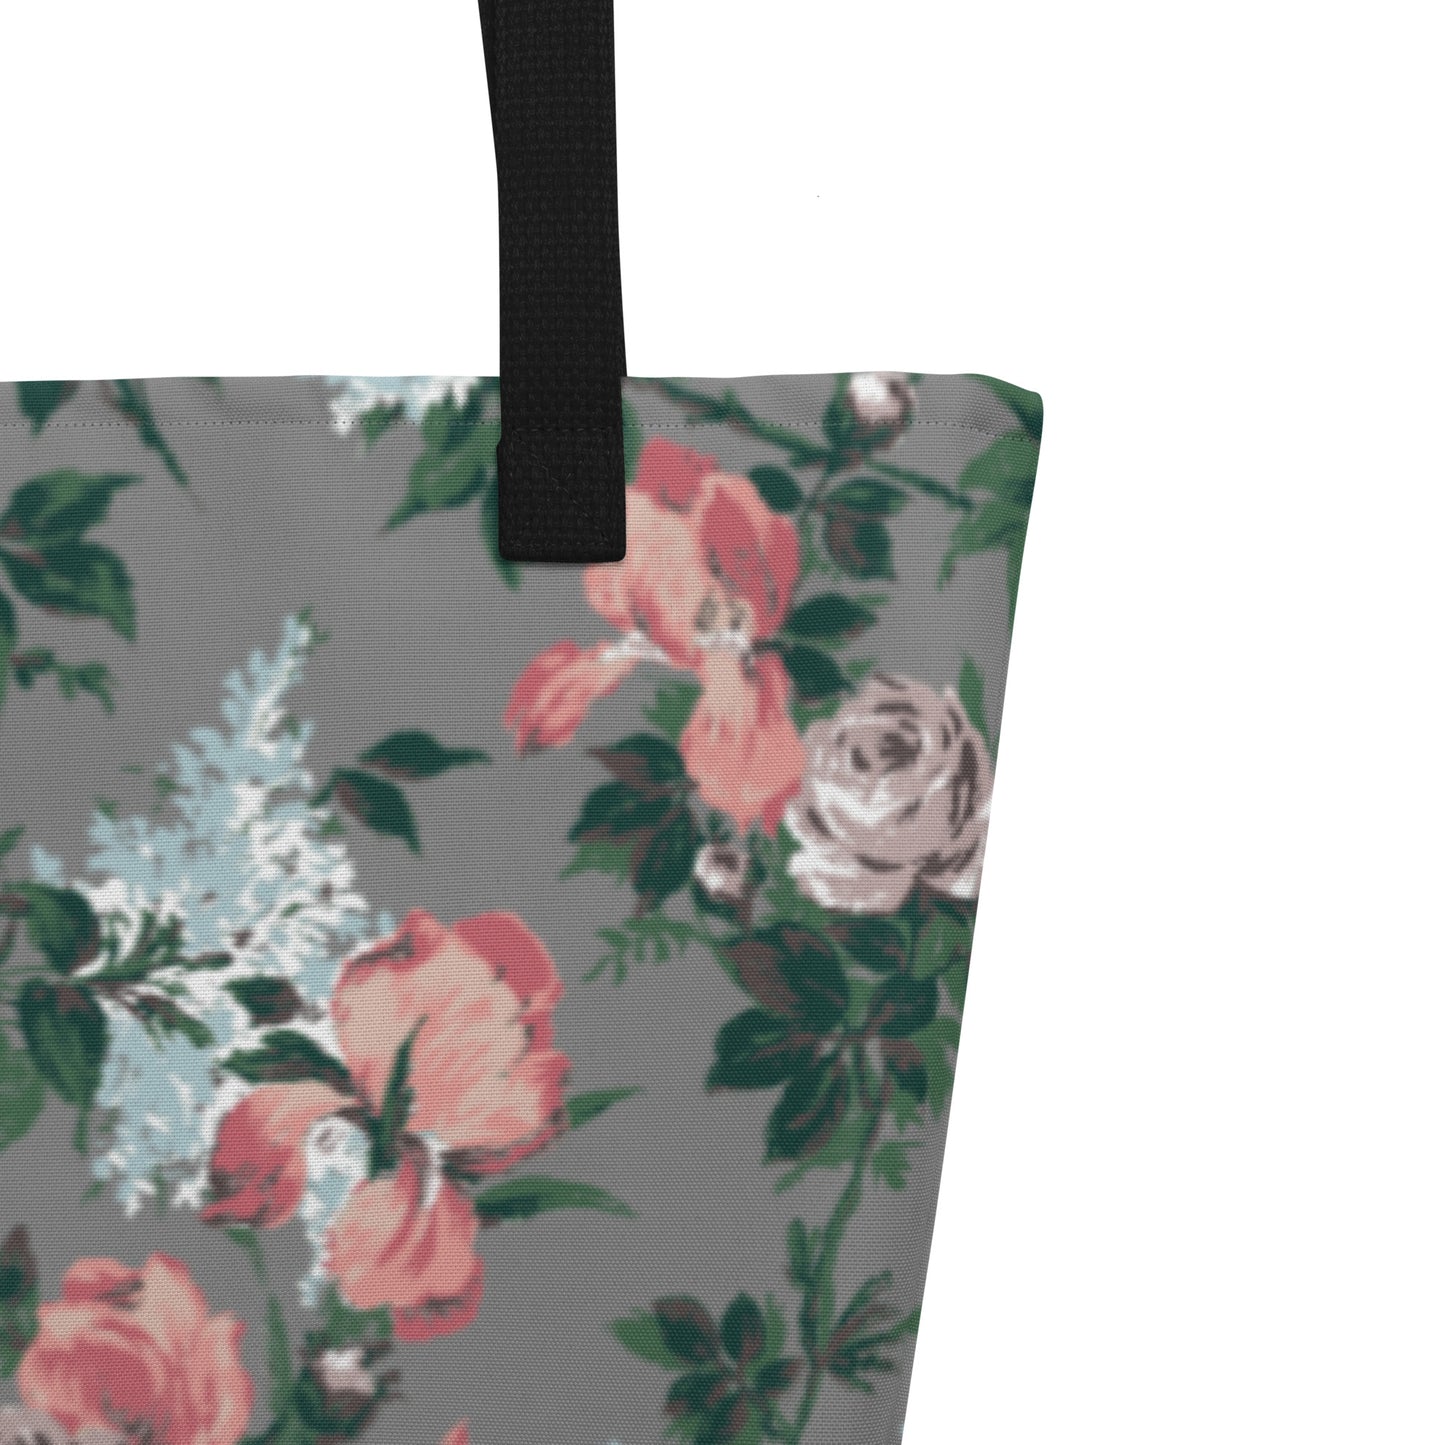 Sunny Days Large Shopper Tote Bag in J'Adore Paris Bella Roses Print | Pinup Couture